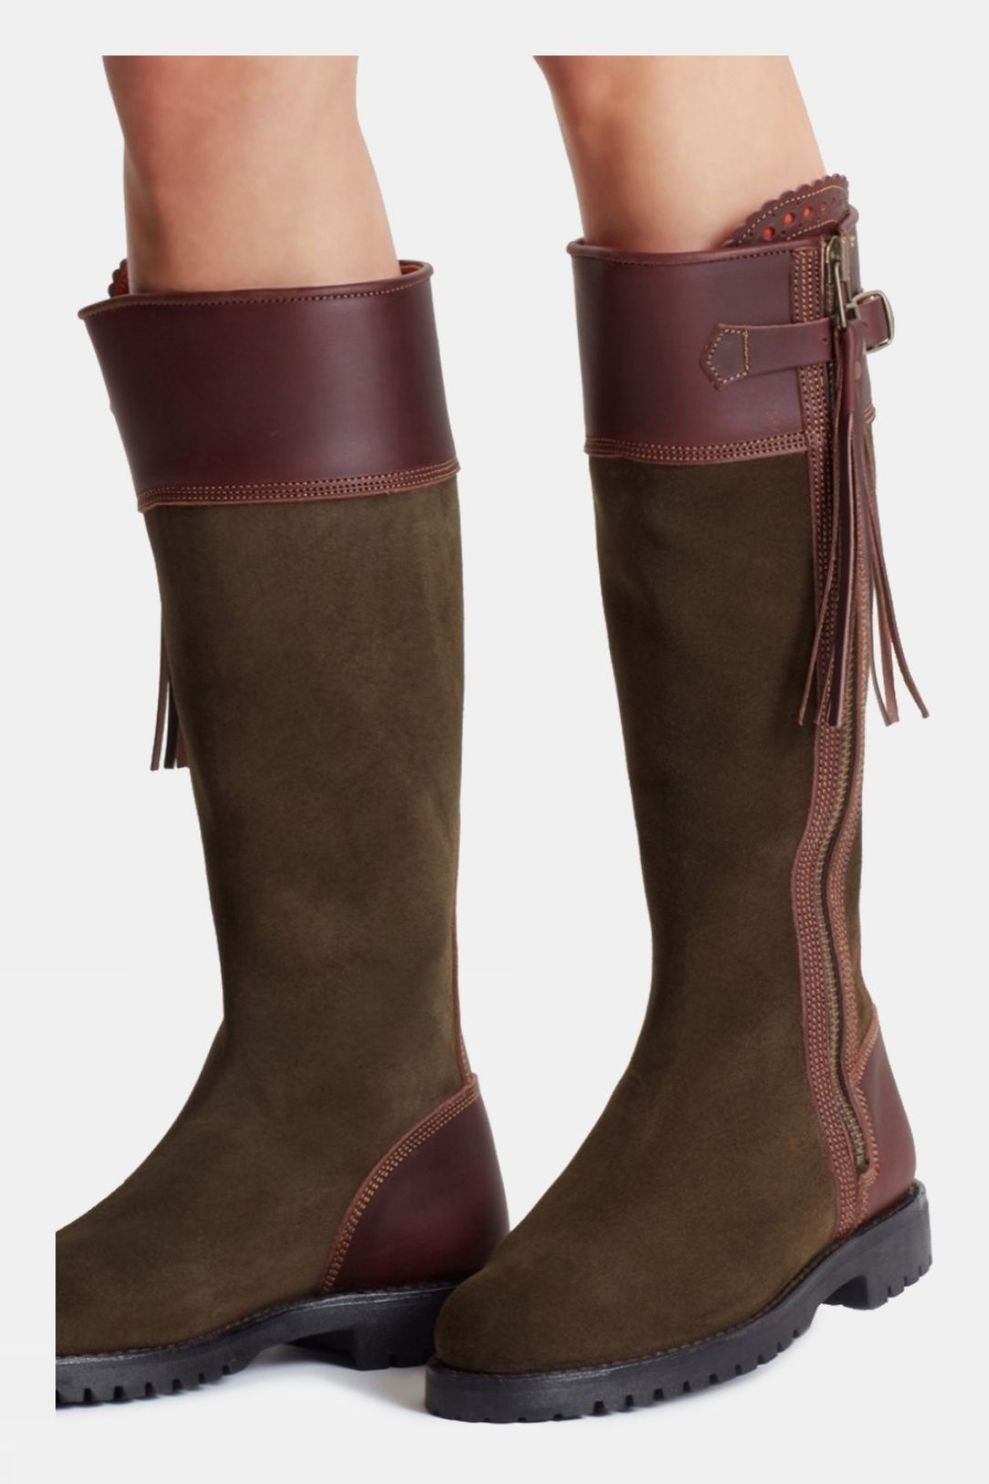 40% OFF PENELOPE CHILVERS Inclement Tassel Boots - Womens Waterproof Suede - Seaweed/Conker - Size 4